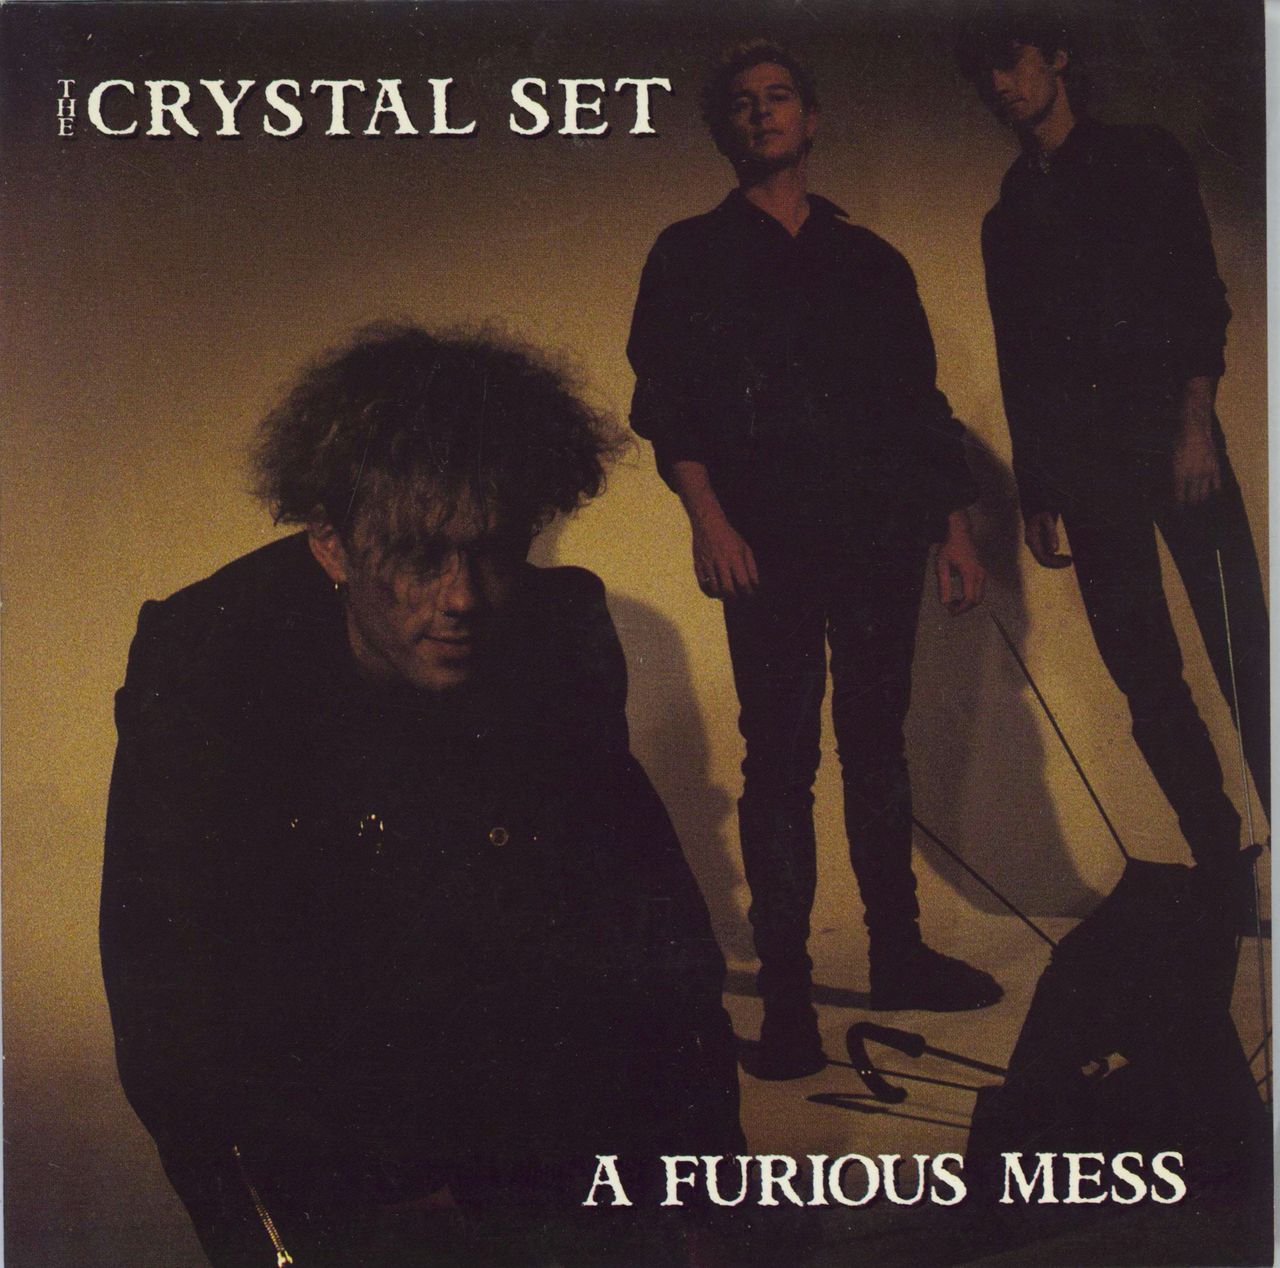 The Crystal Set A Furious Mess Australian 7" vinyl single (7 inch record / 45) 877432-7 / REDSP22